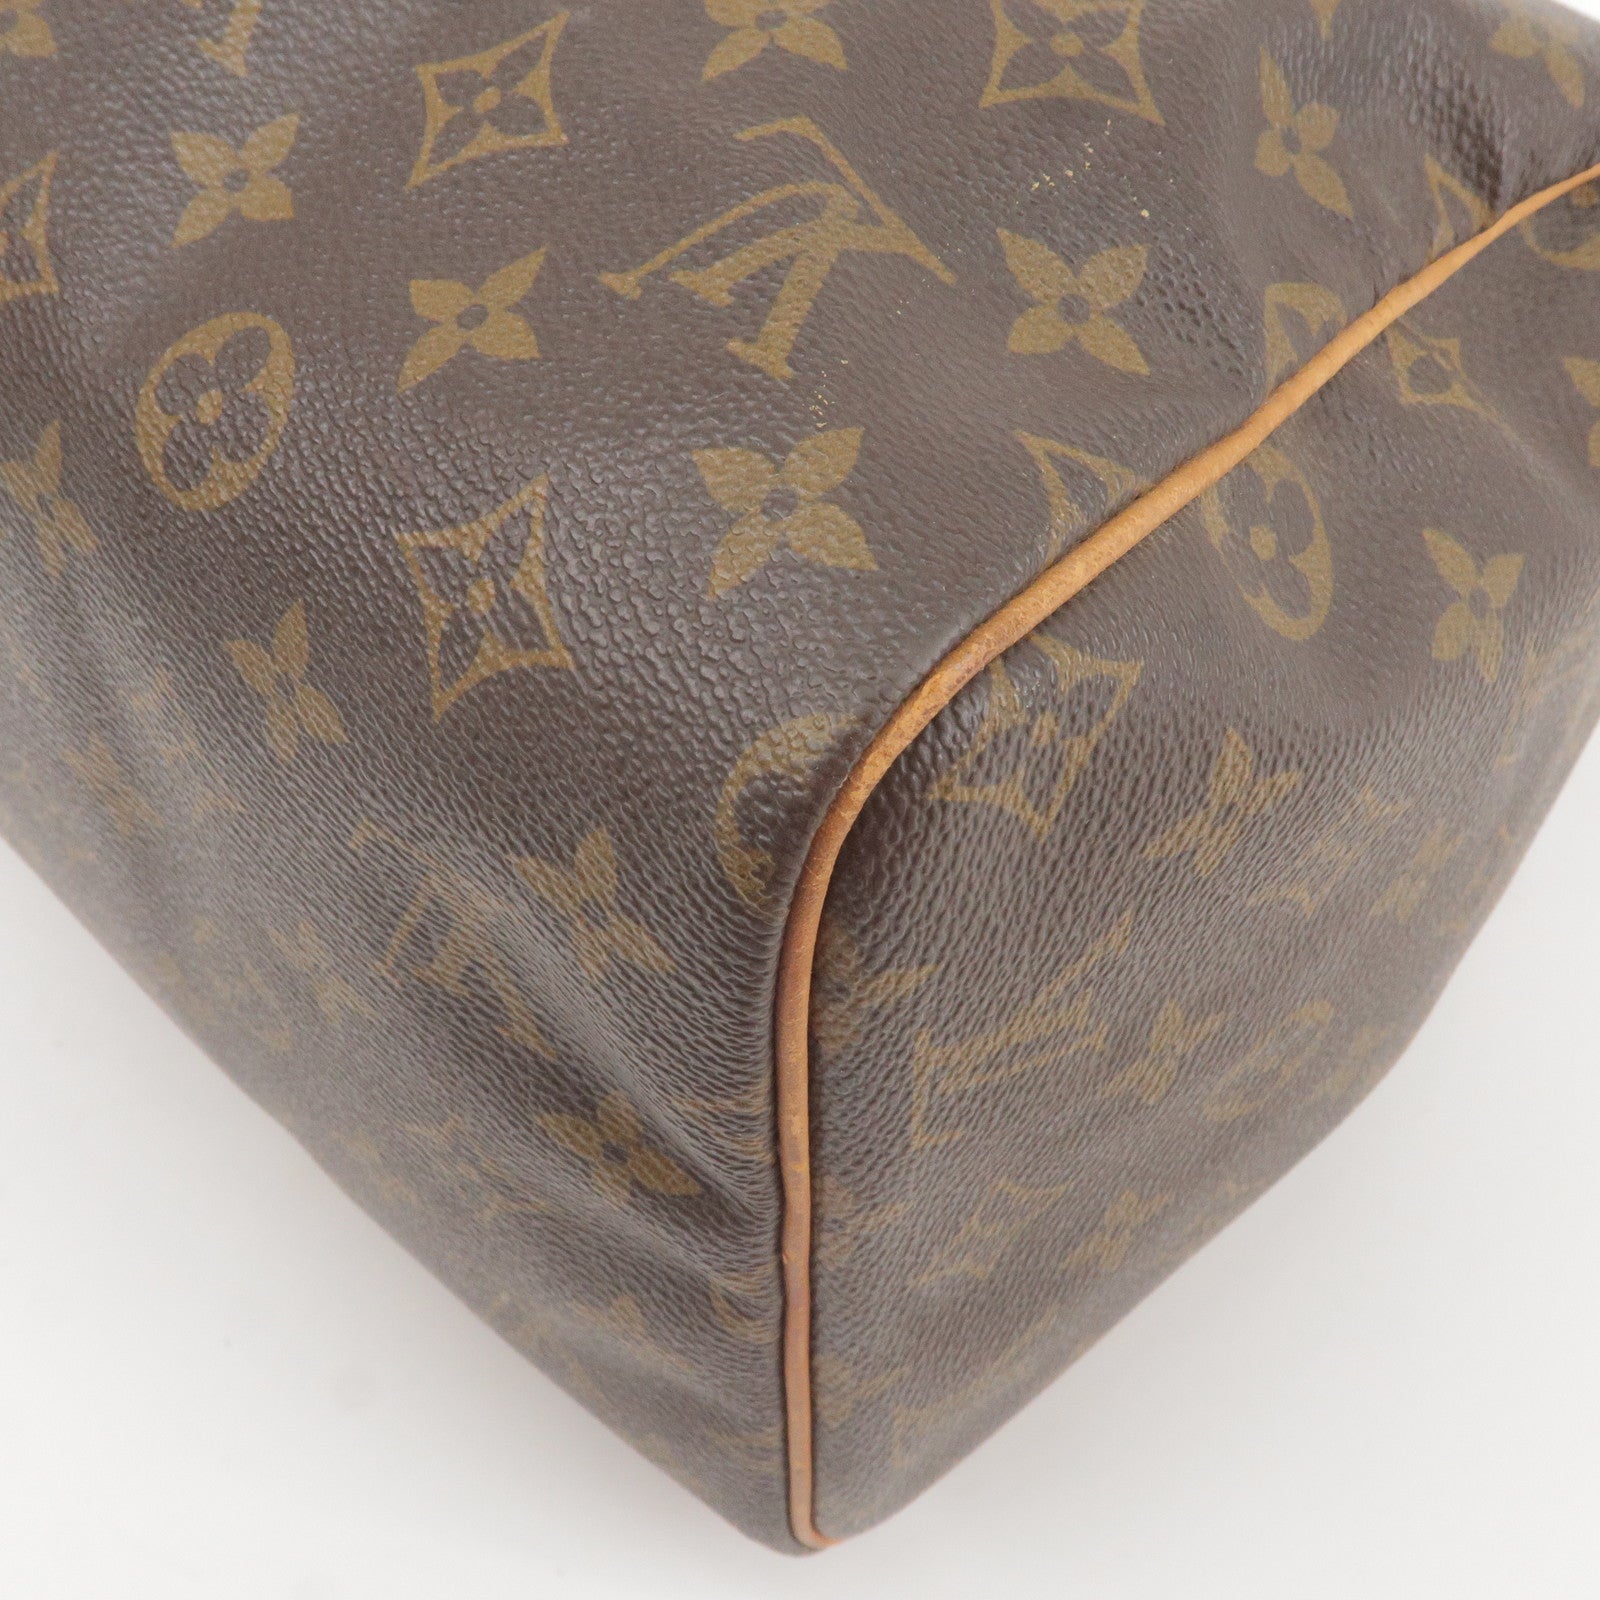 Louis Vuitton 2011 pre-owned Monogram Saumur 30 Messenger Bag